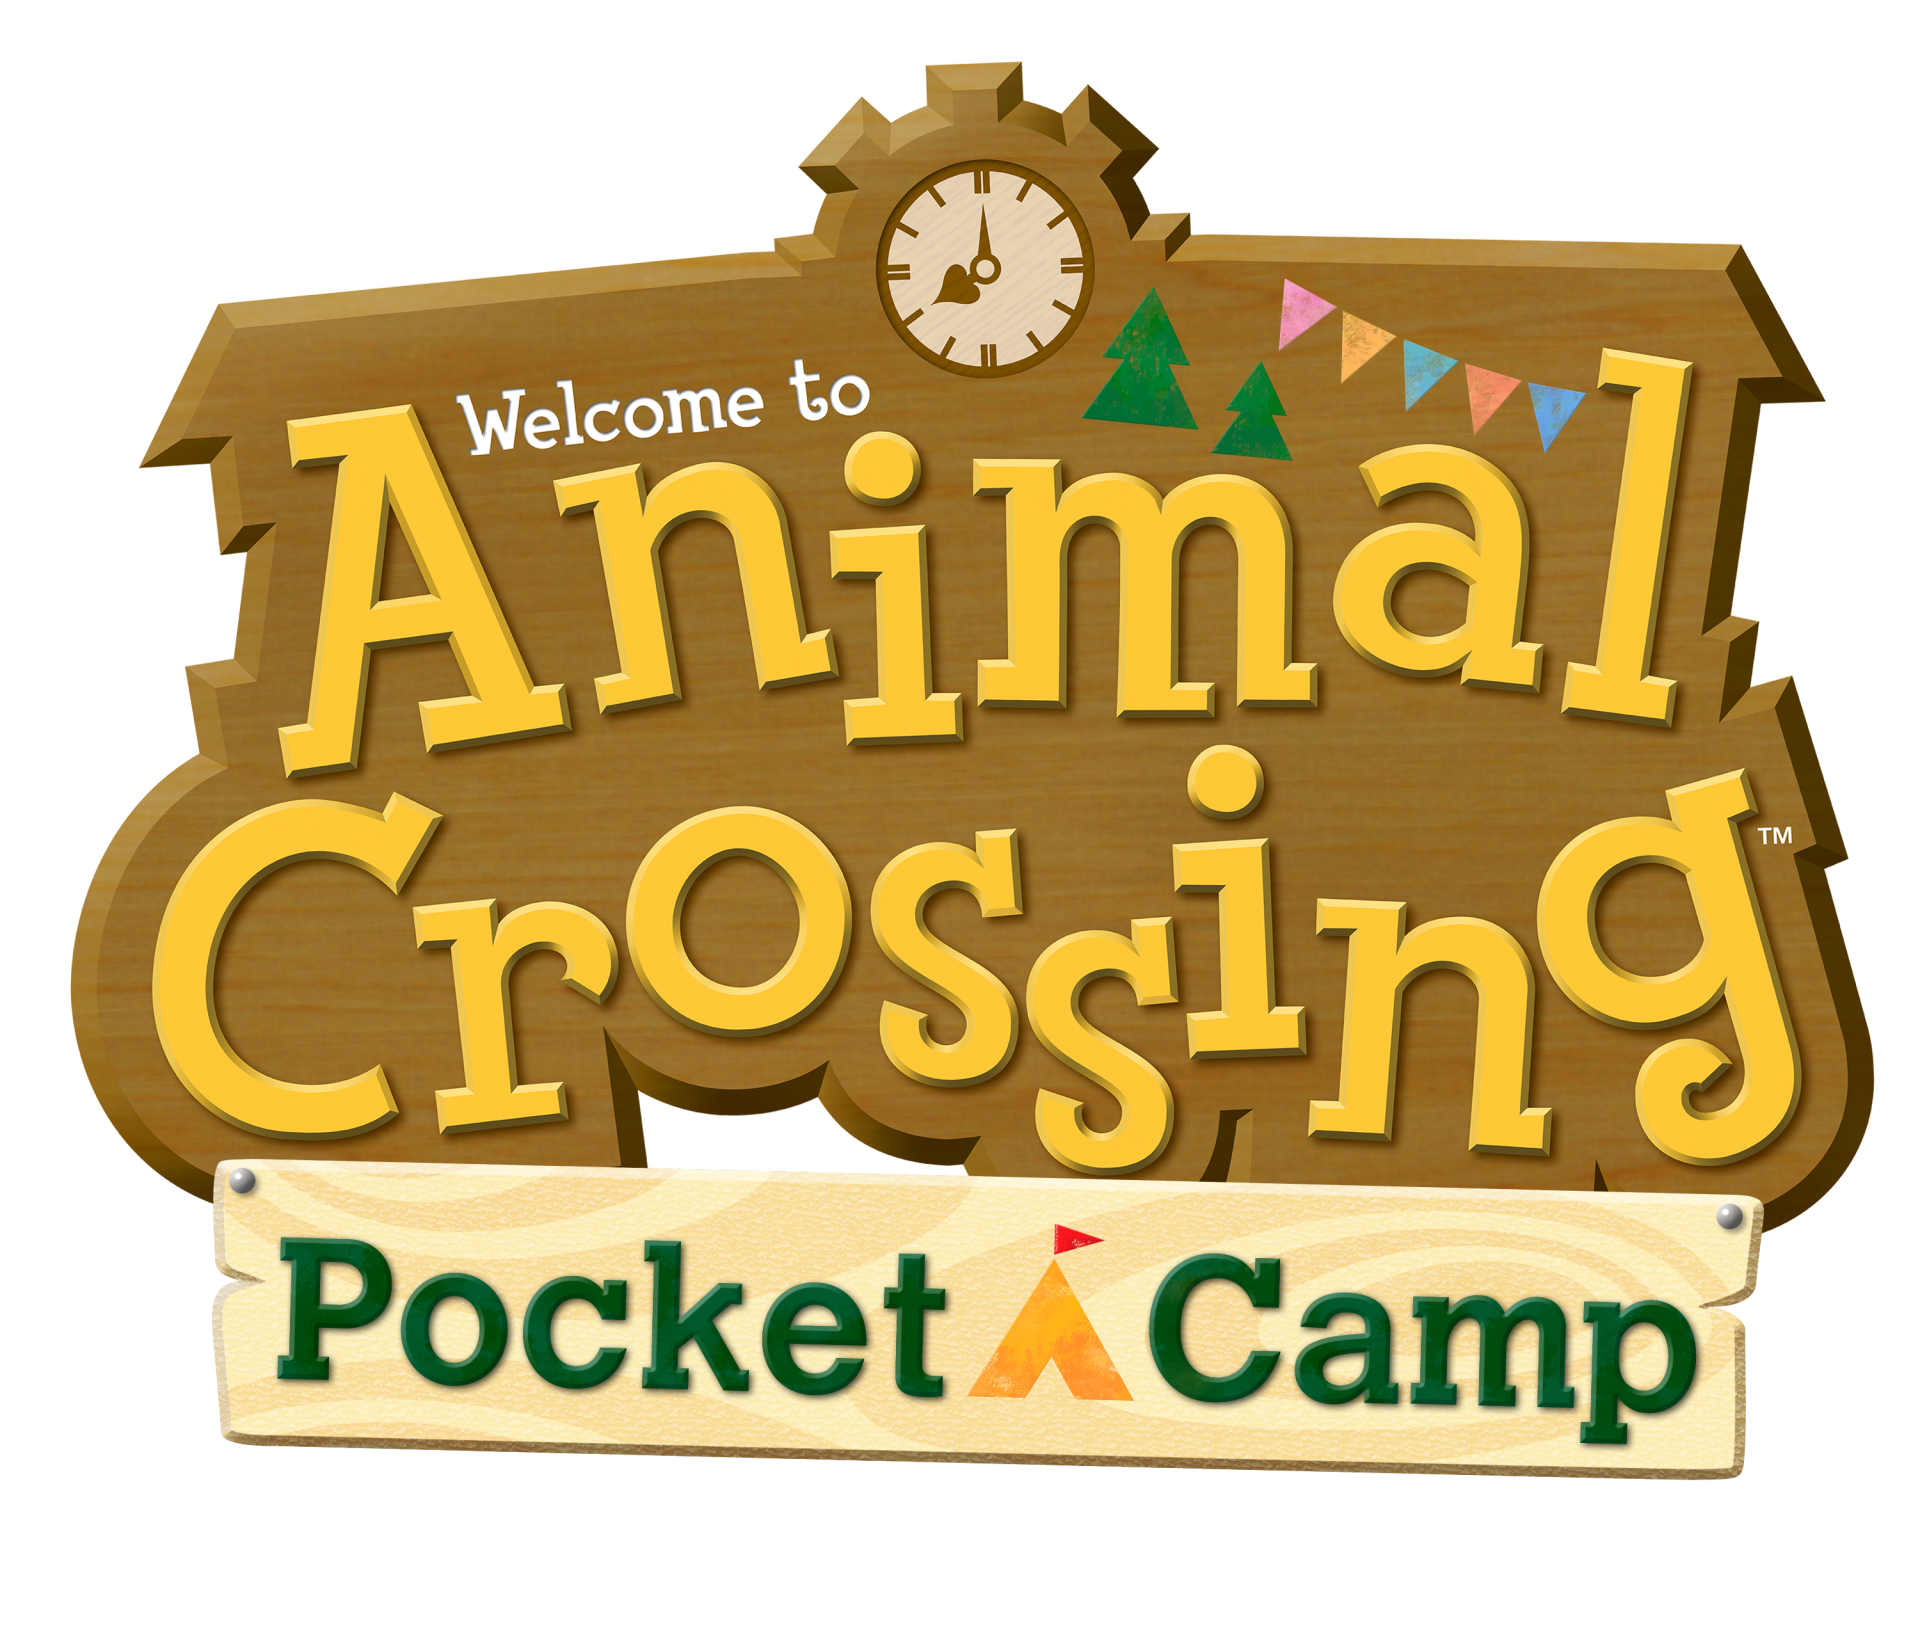 Энимал Кроссинг покет Камп. Анимел Кроссинг пакет Камп. Animal Crossing Pocket Camp logo. Animal Crossing логотип. Pocket animal